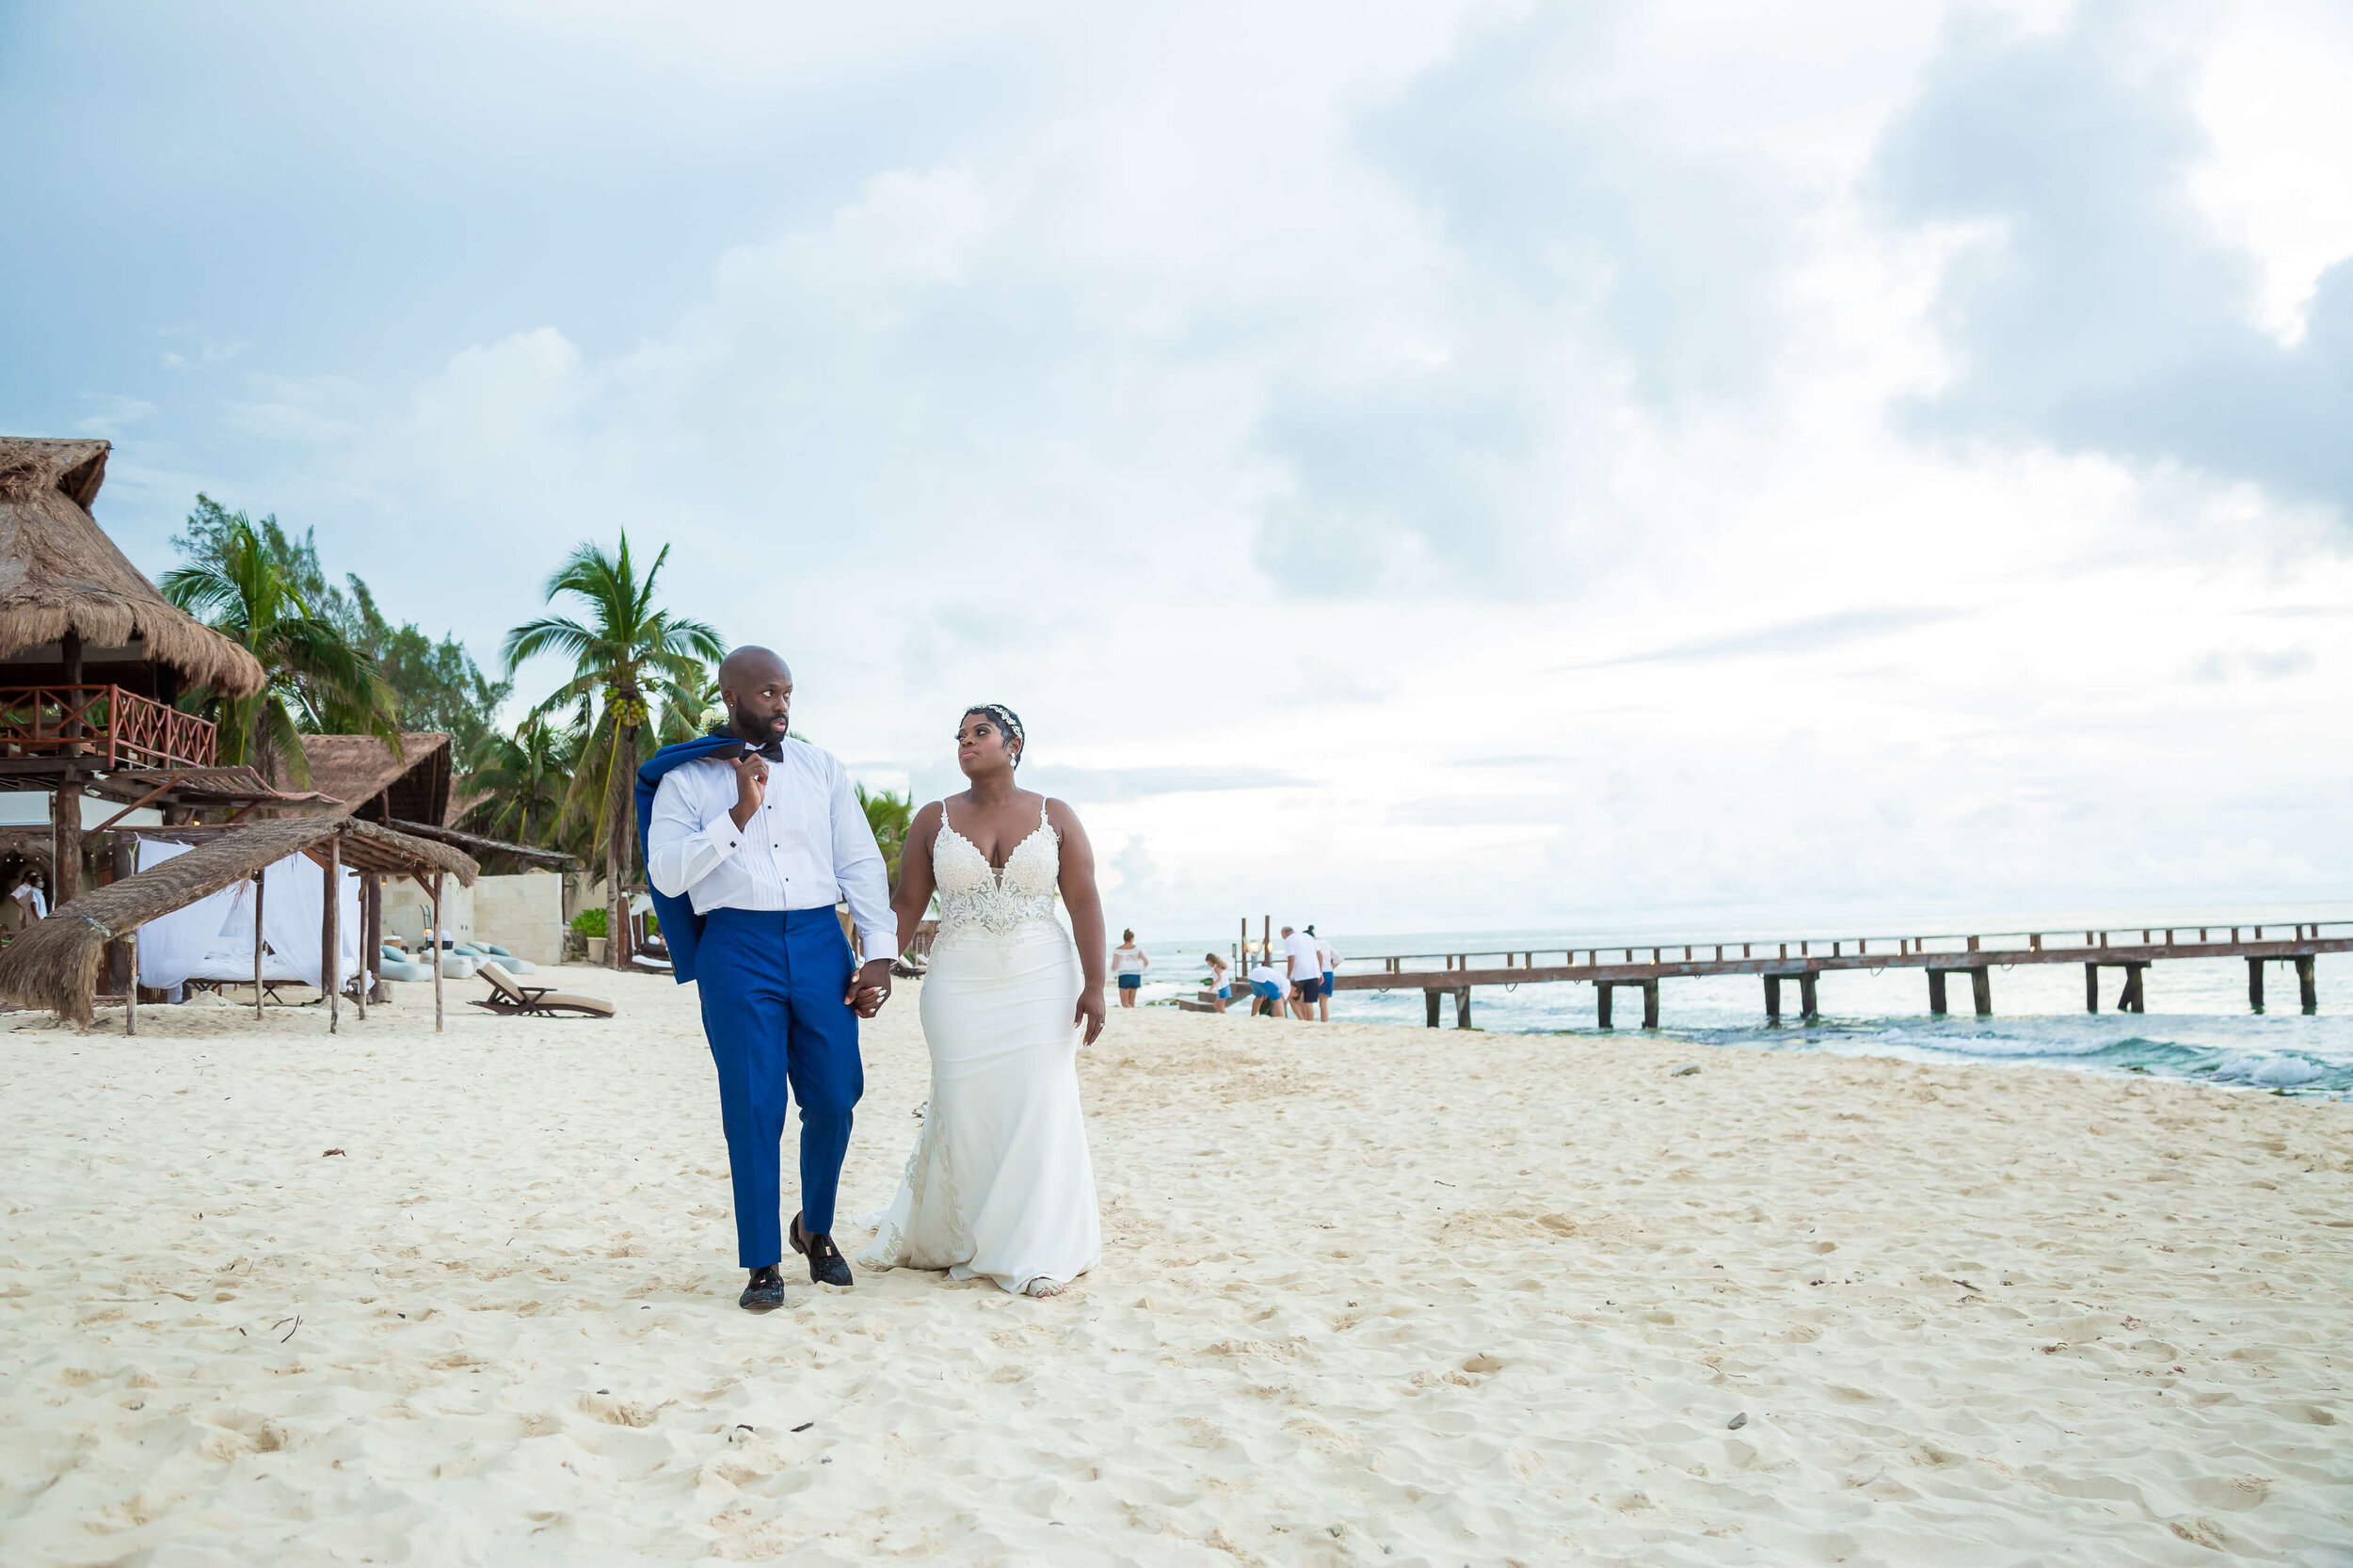 tashima-how-to-plan-a-destination-wedding-in-playa-del-carmen-mexico-azul-fives-beach-resort-black-destination-bride-desti-tv-desti-guide-to-destination-weddings-2020-couple1.jpg